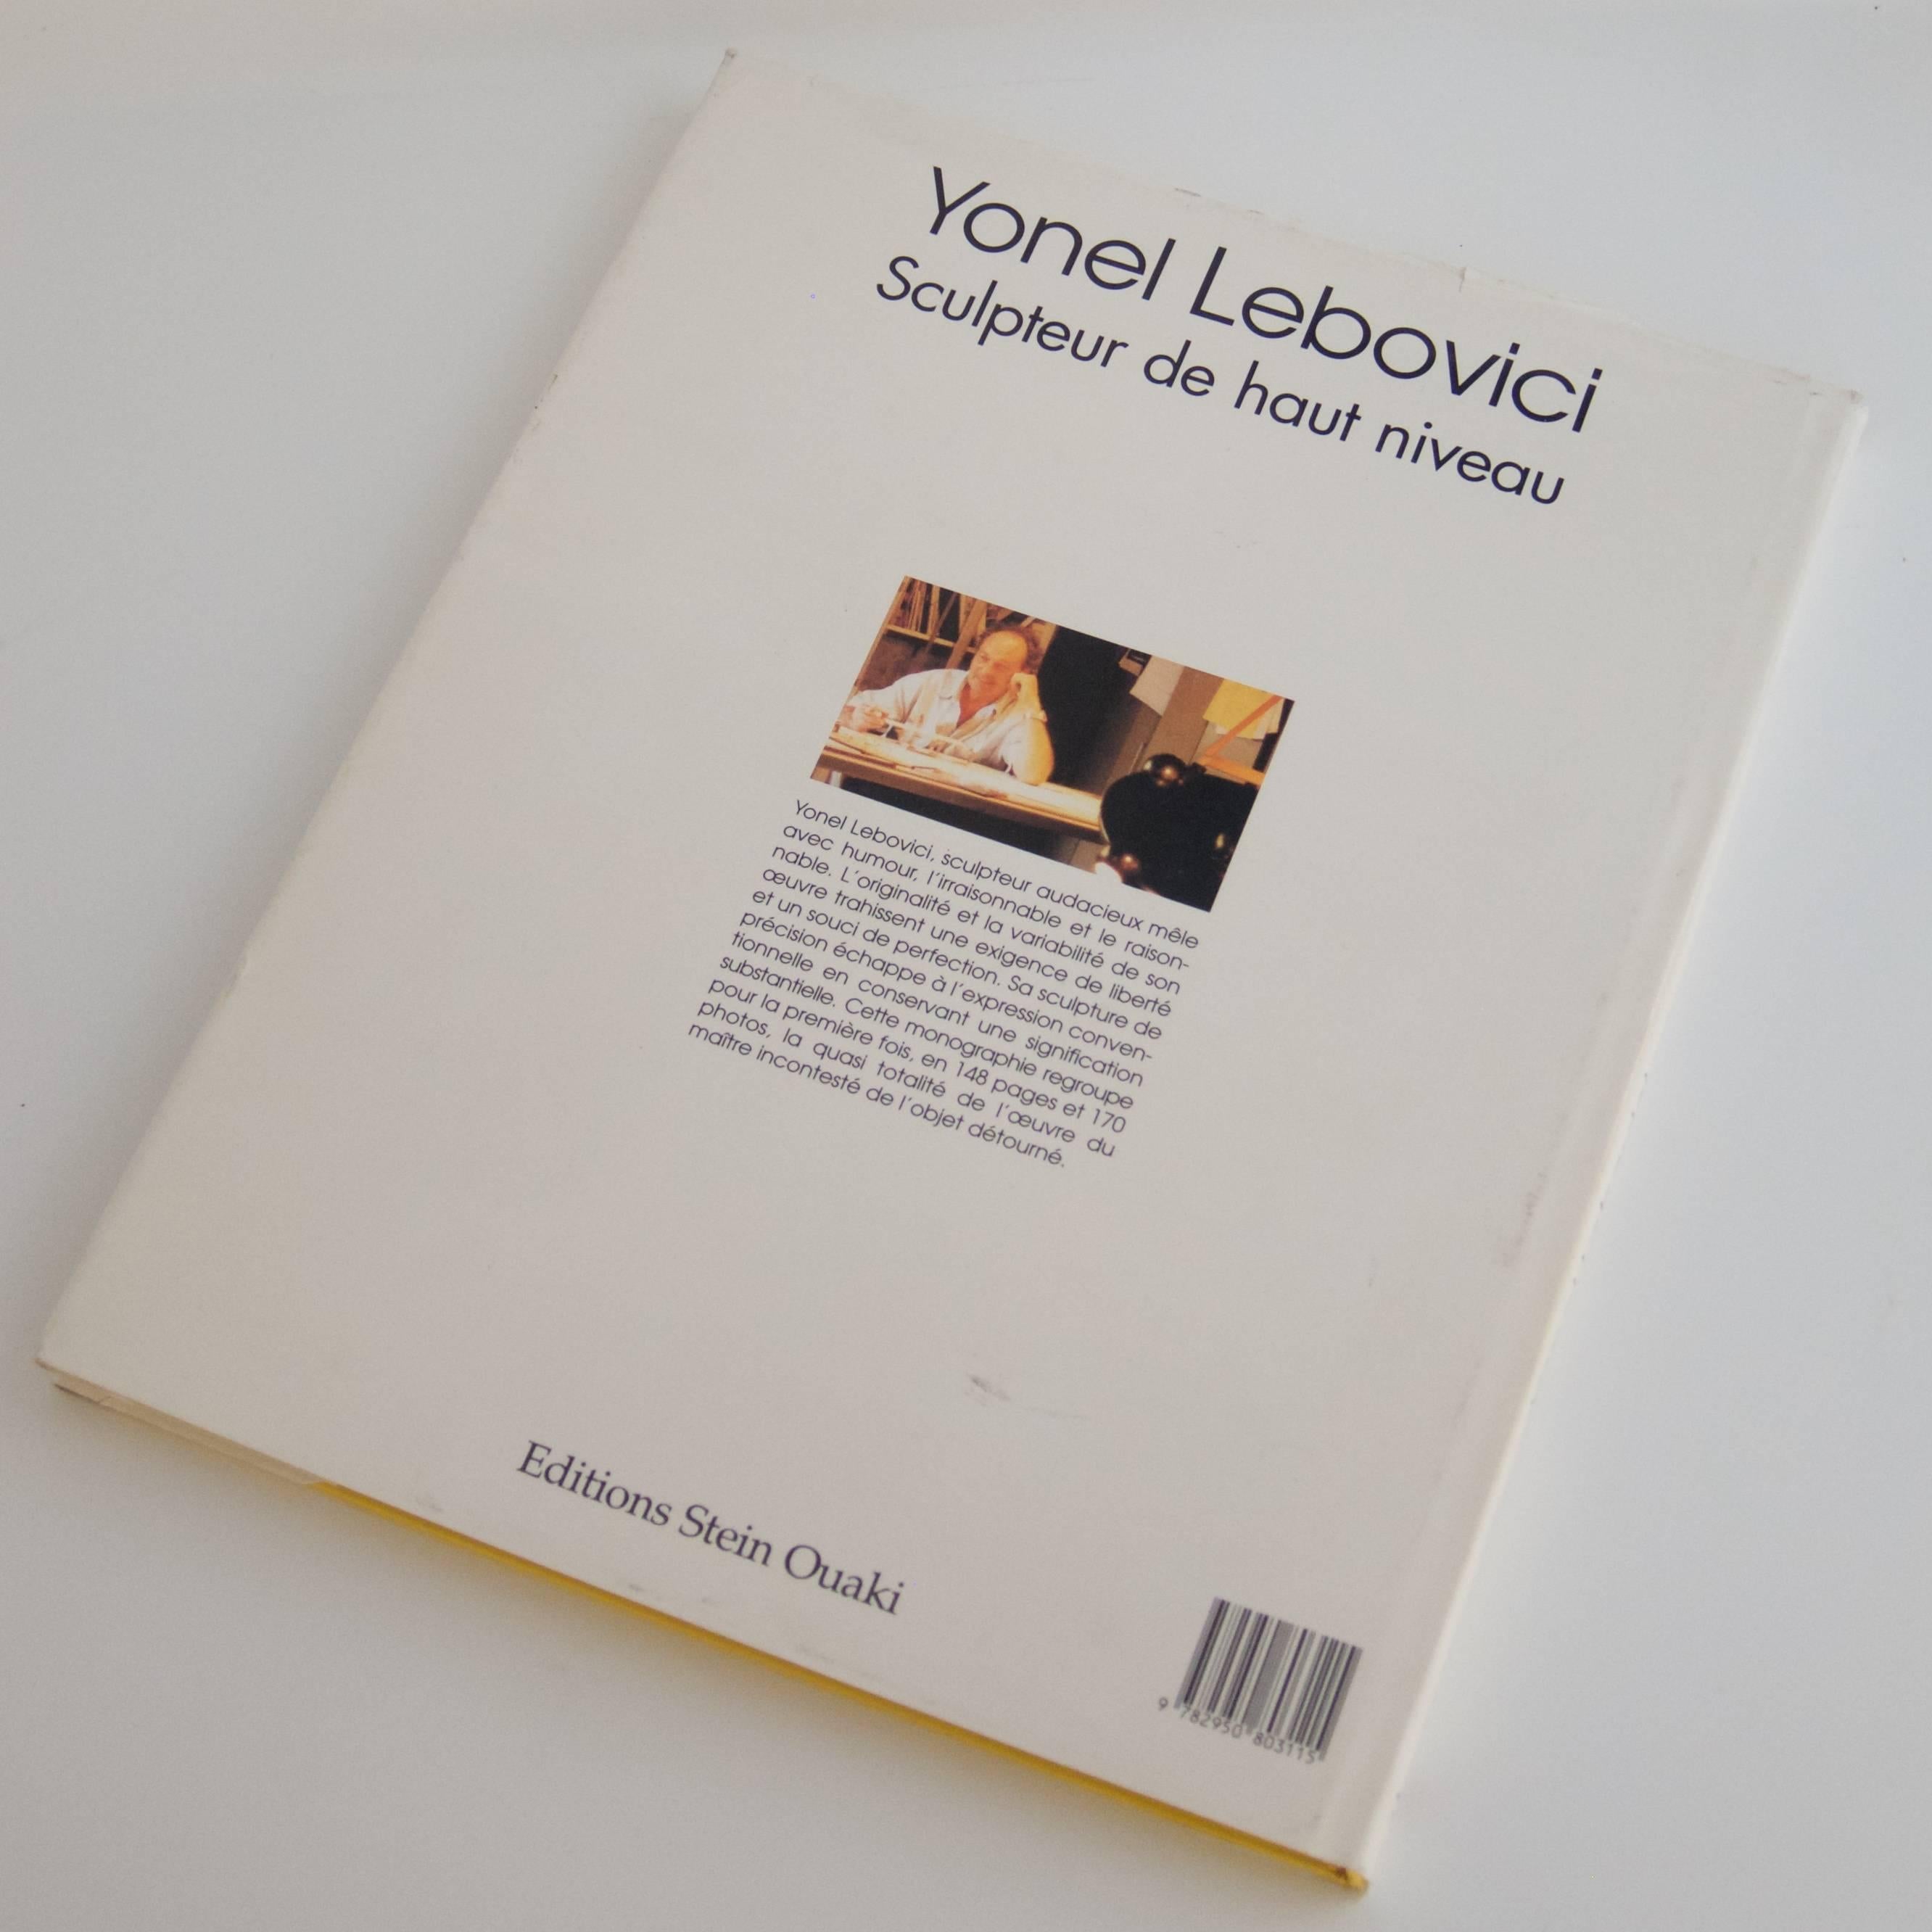 Yonel Lebovici - Sculpteur de haut niveau
by Michéle Chartier

First edition, out of print!

Hardcover, 148 pages
Measaure: 23.5 x 28.5 cm

Published 2002 by Editions Stein Quaki.

ISBN 2-95008031-1-3

Perfect condition!

Language: